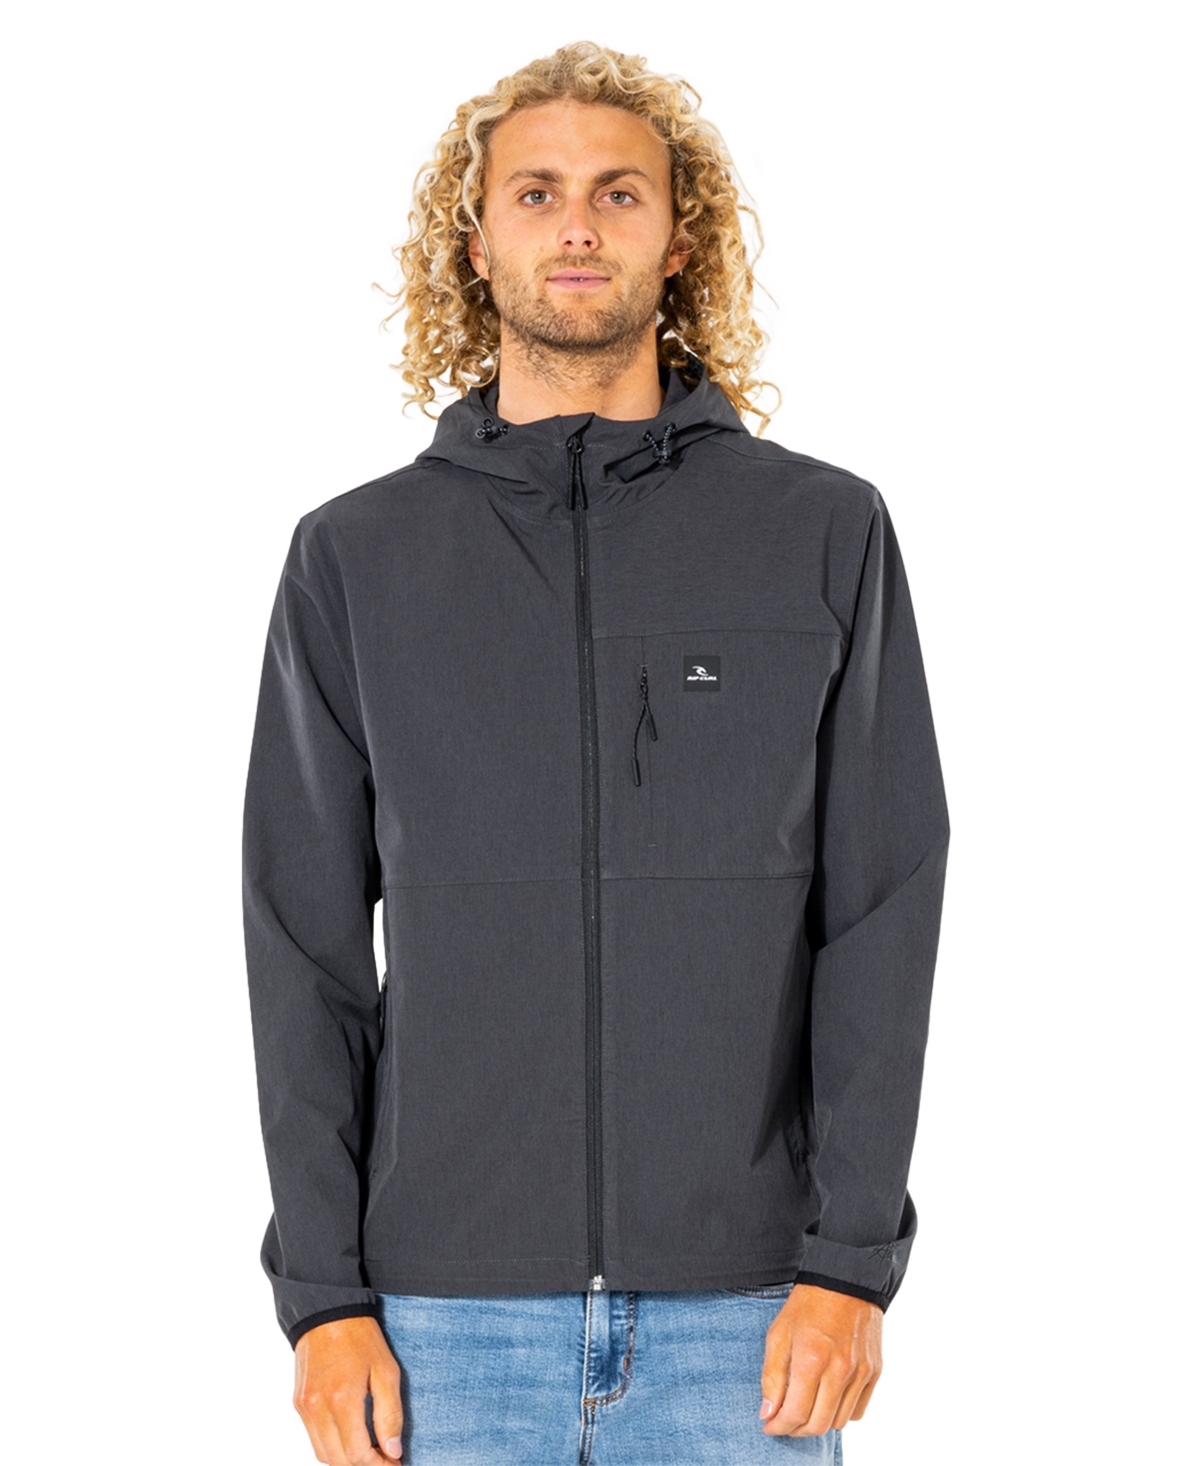 Rip Curl Men's Anti Series Elite Hooded Jacket (Black, Size M) $27.95 + Free Shipping